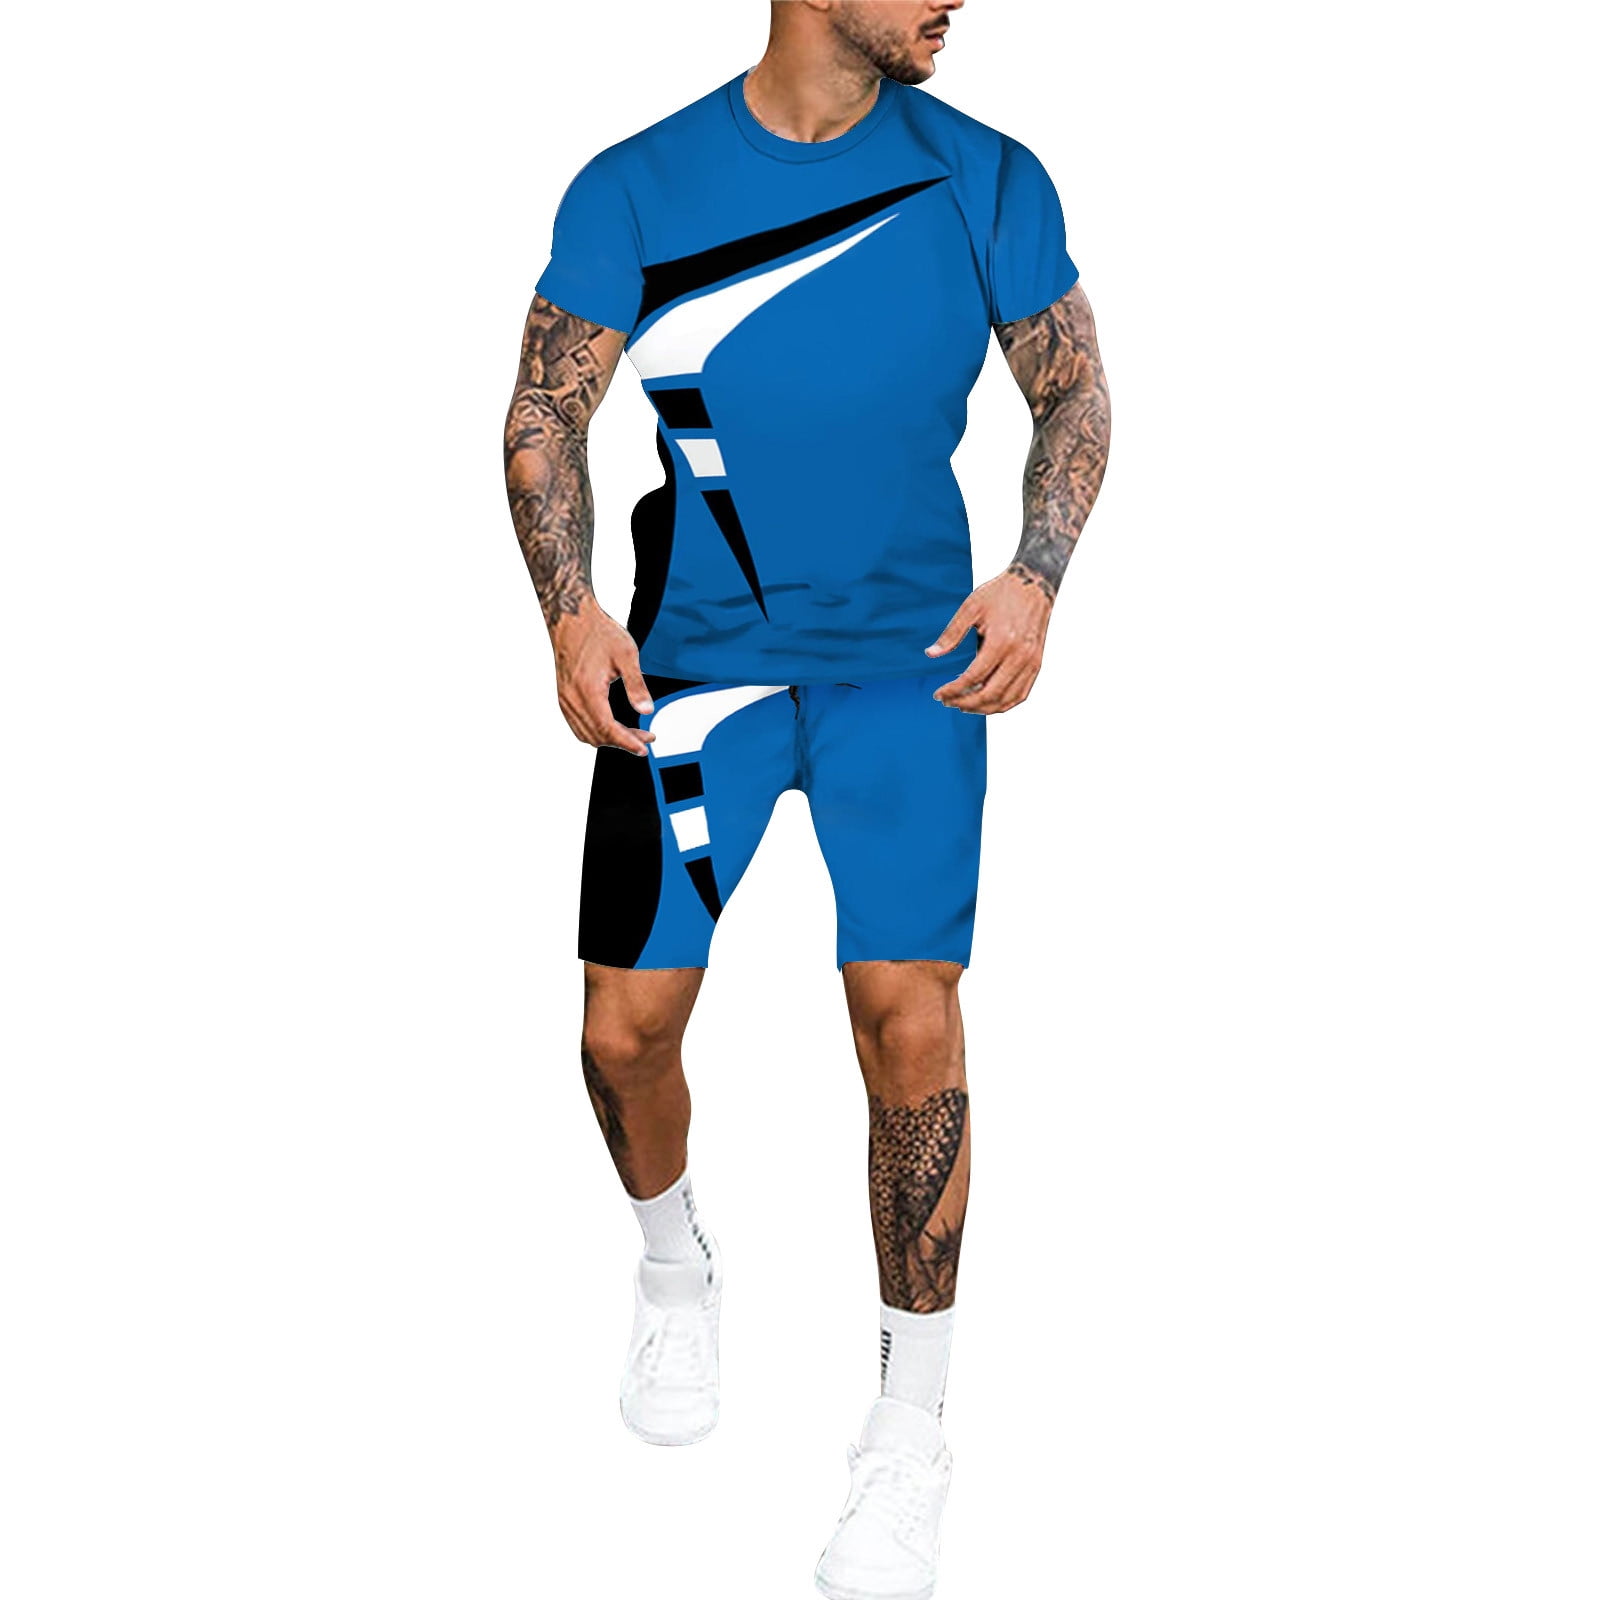 8QIDA Men's Quick Dry 3D Short Sleeve Suit Shorts Beach Tropical ...